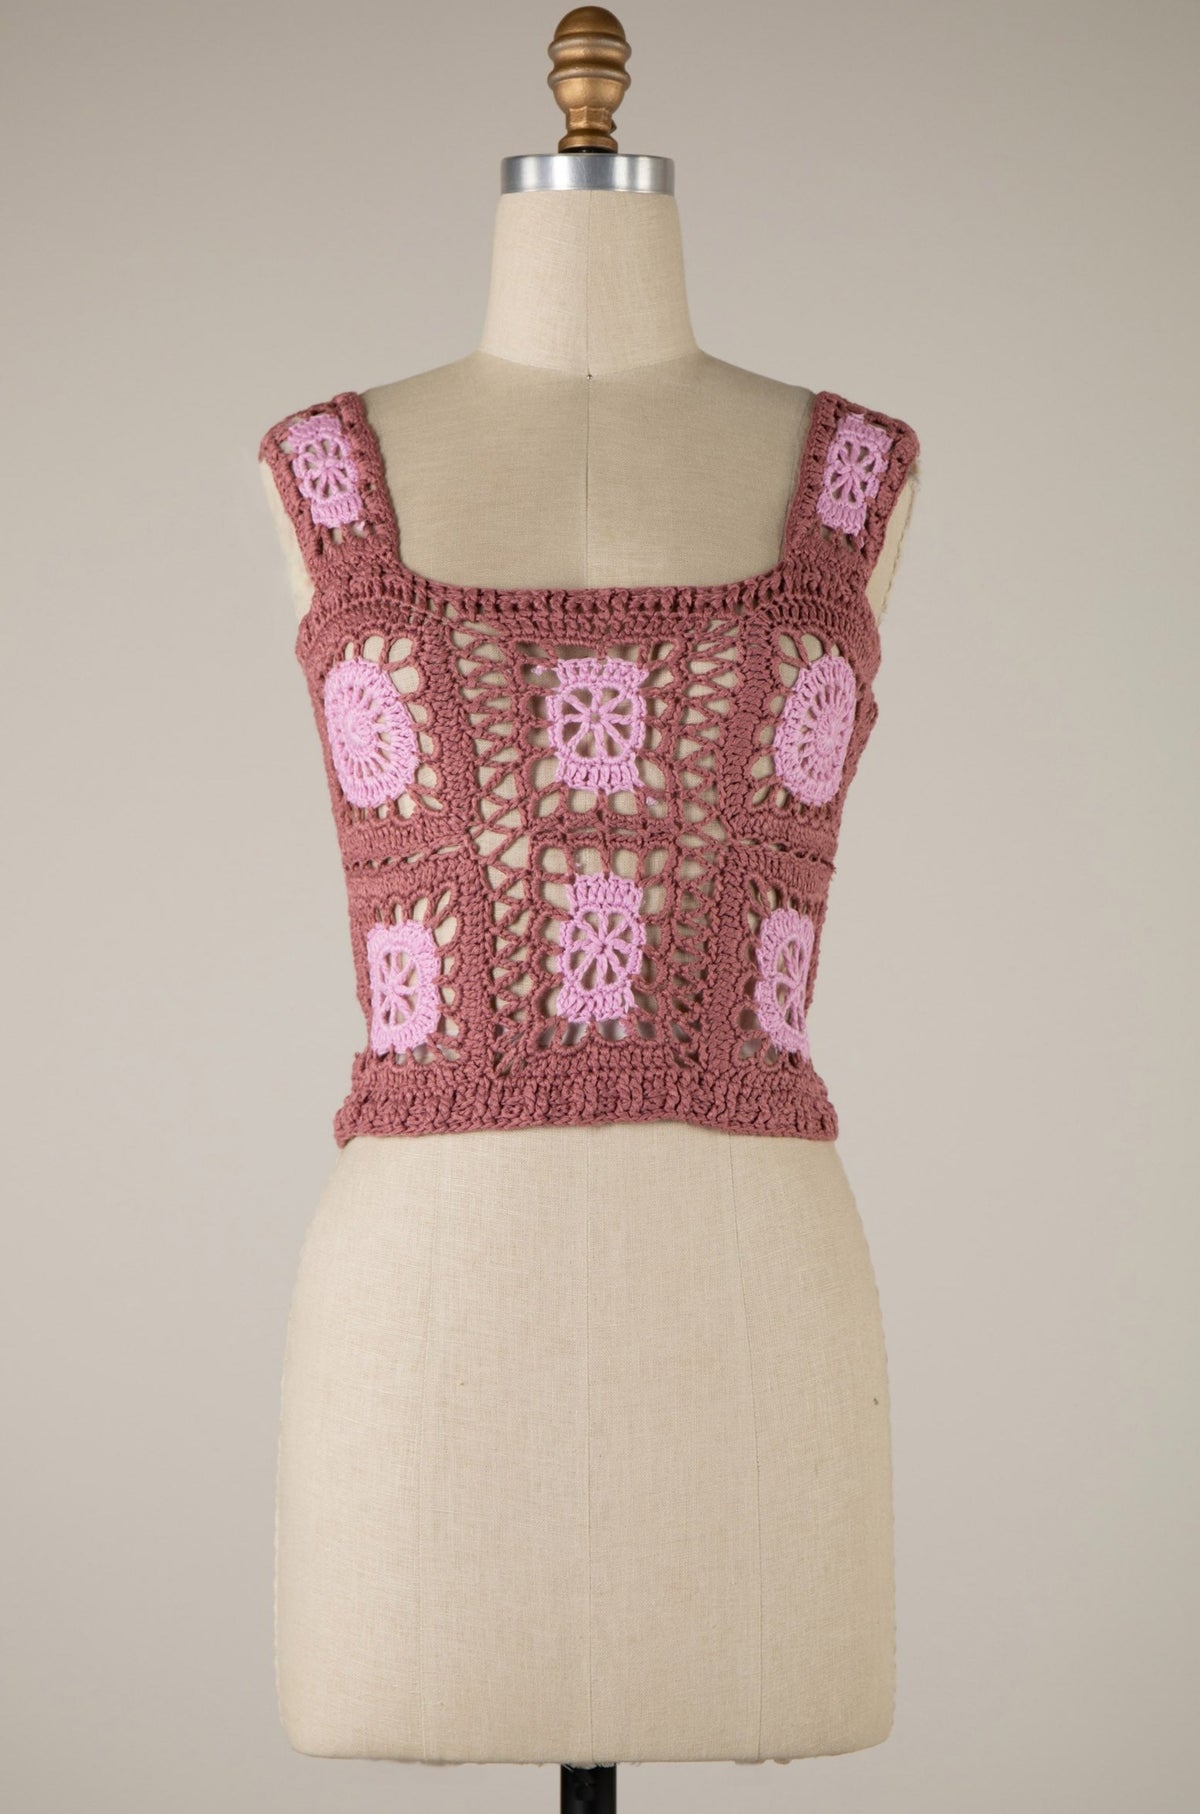 Kira Crochet Top